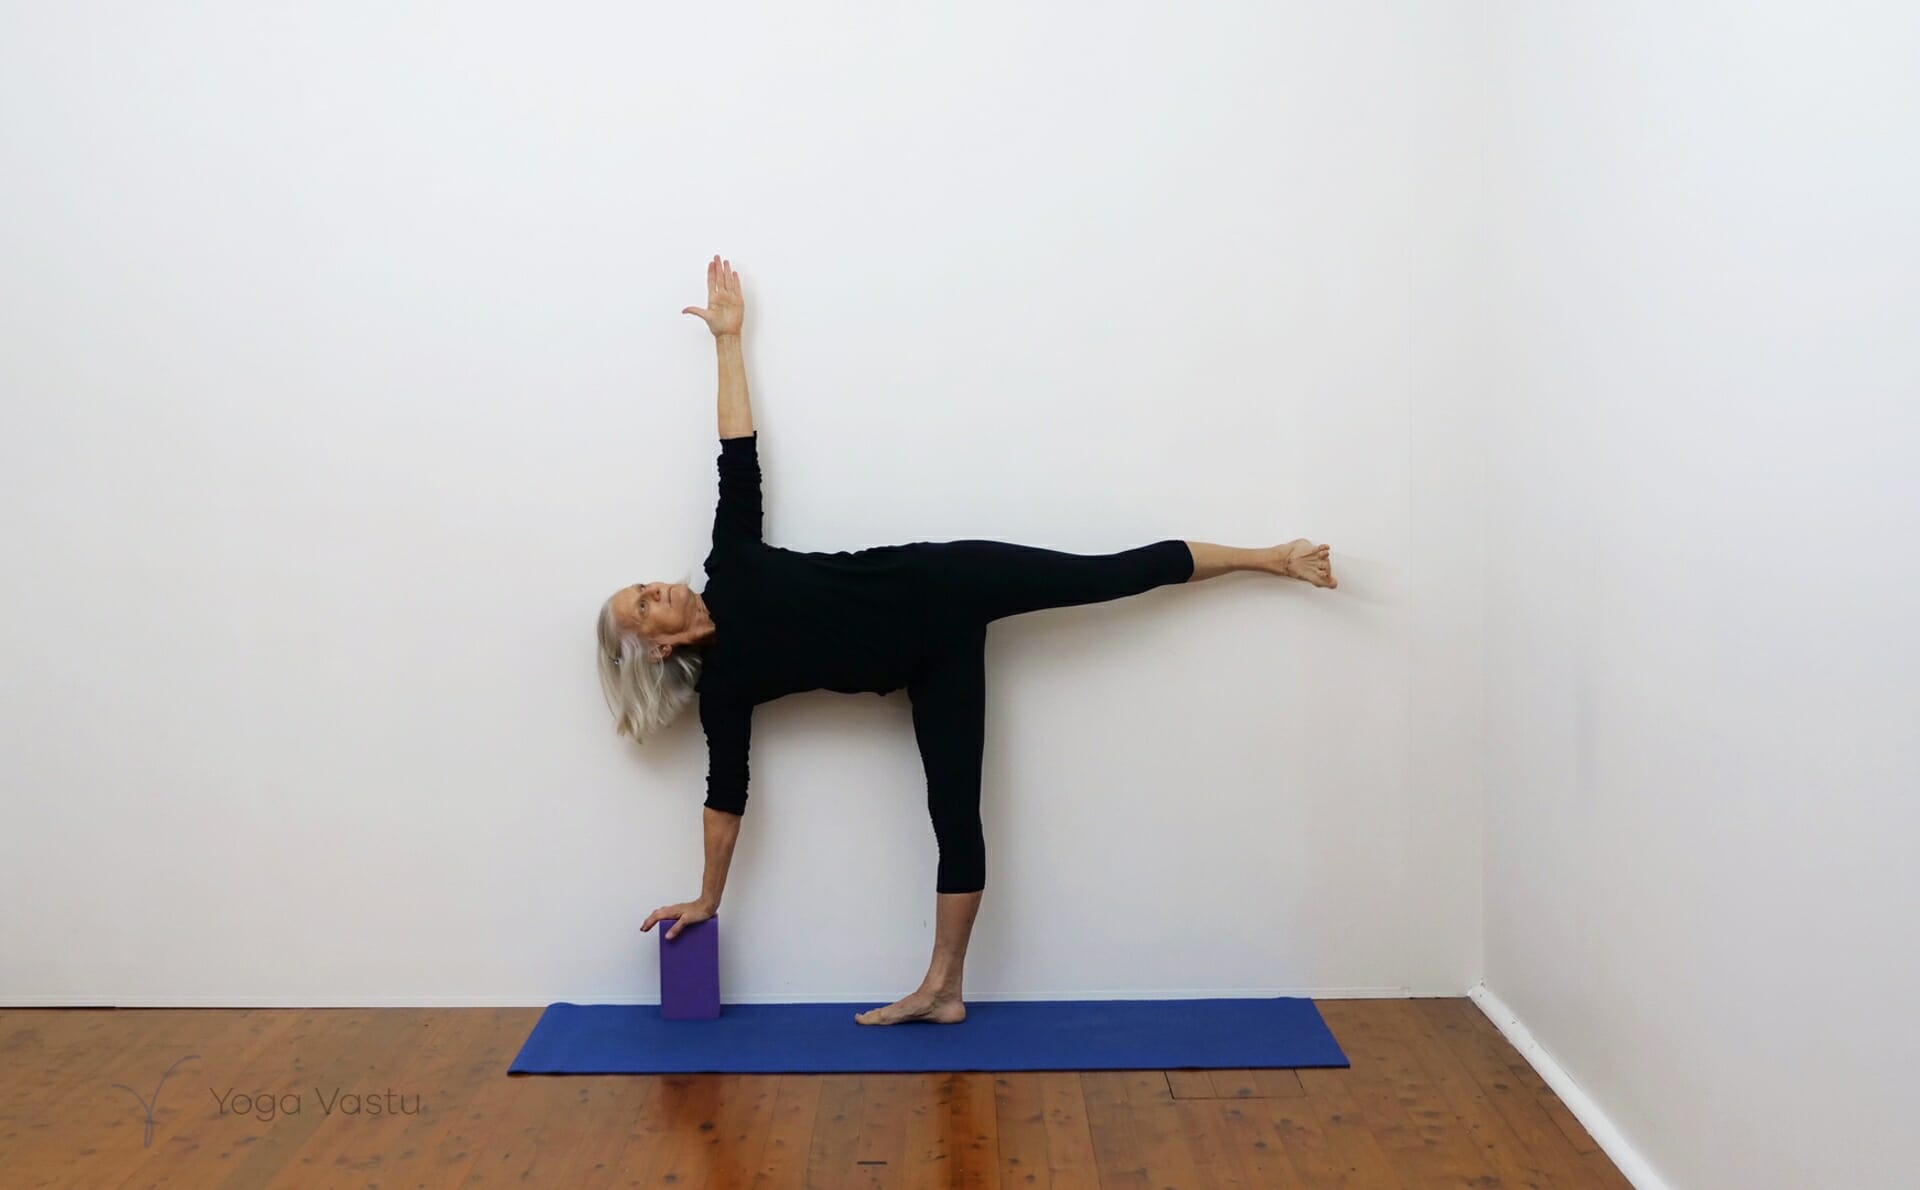 Standing yoga poses set stock vector. Illustration of pilates - 151992268